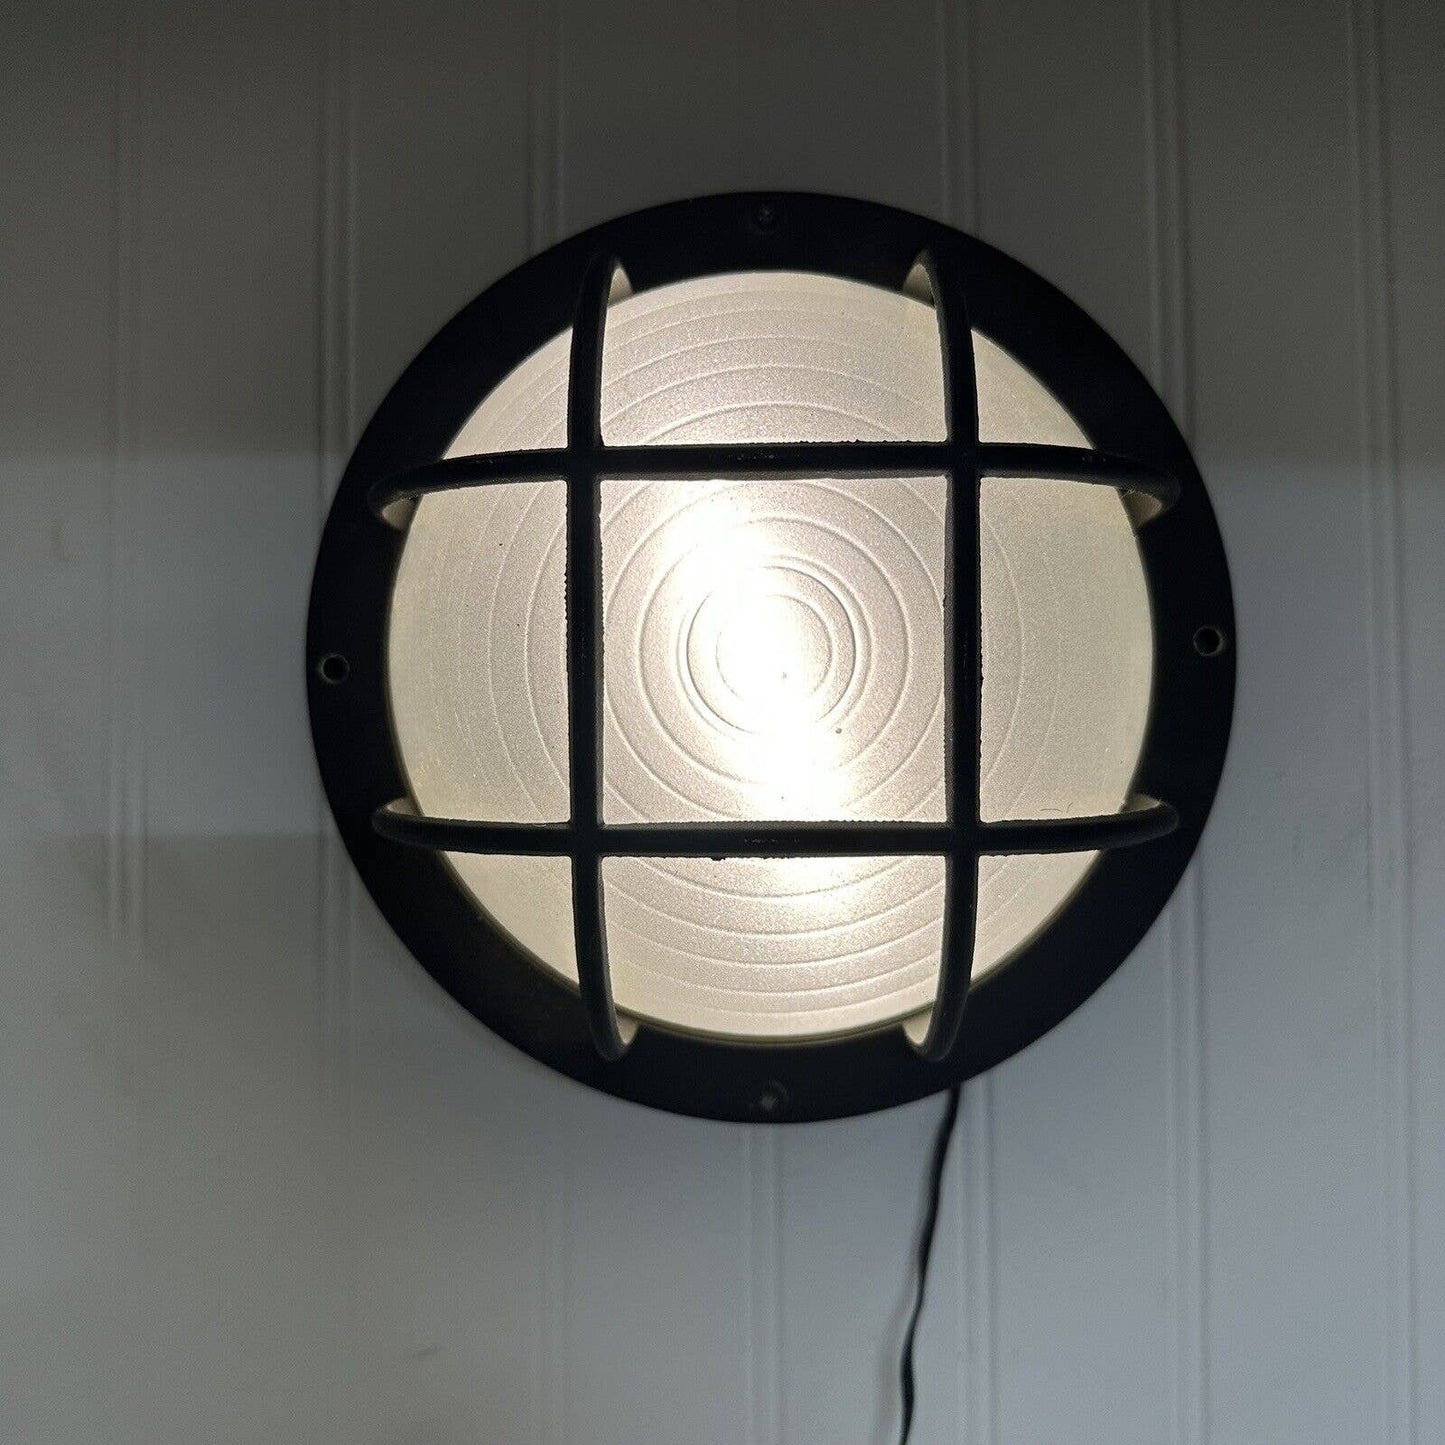 Minispotlight.com 12v 8” Round Caged Light Warm White Haunted House Escape Room